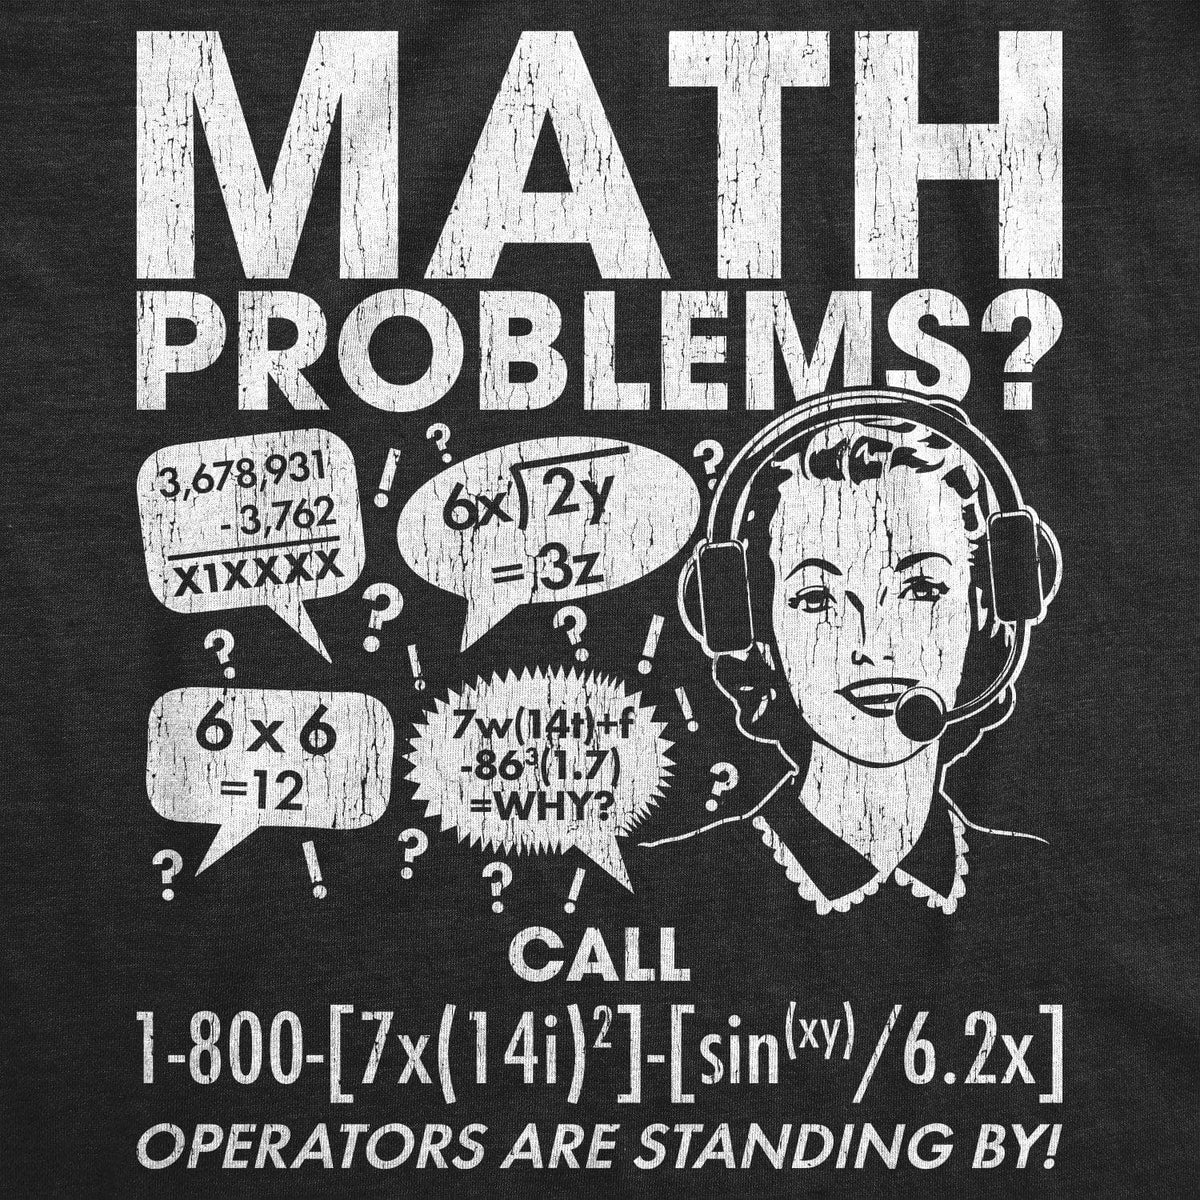 Math Problems? Men&#39;s Tshirt - Crazy Dog T-Shirts